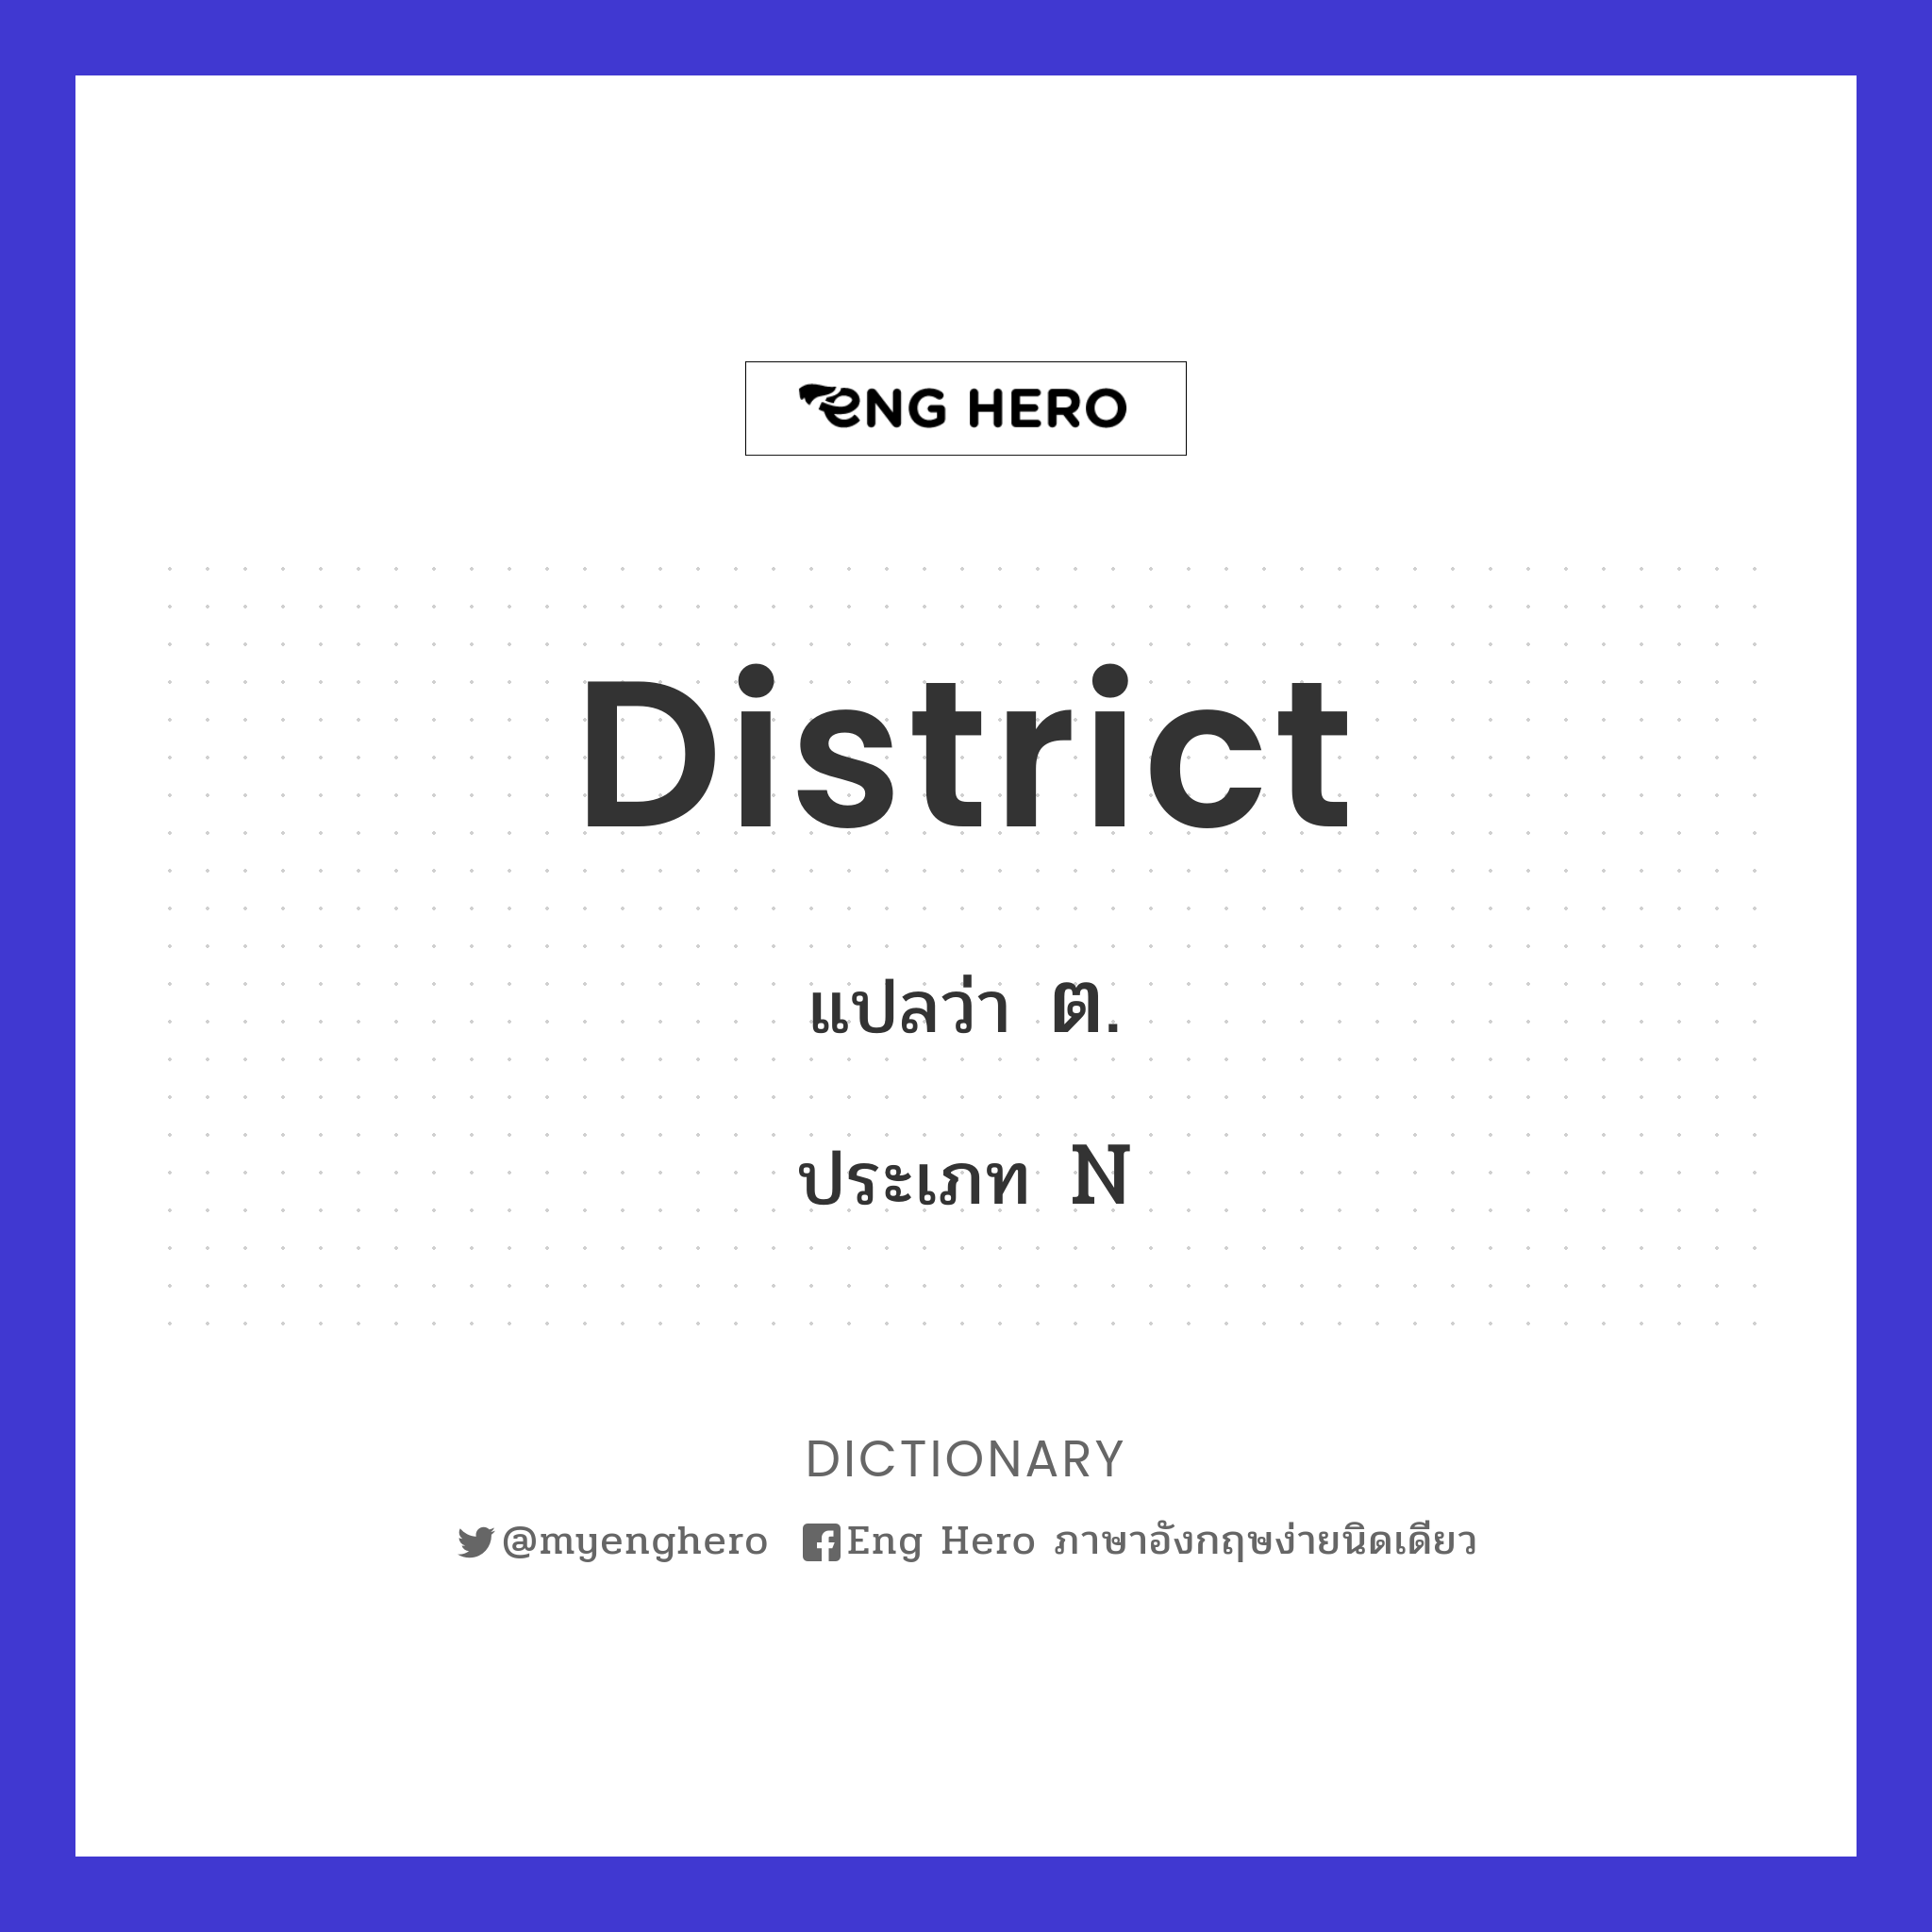 district